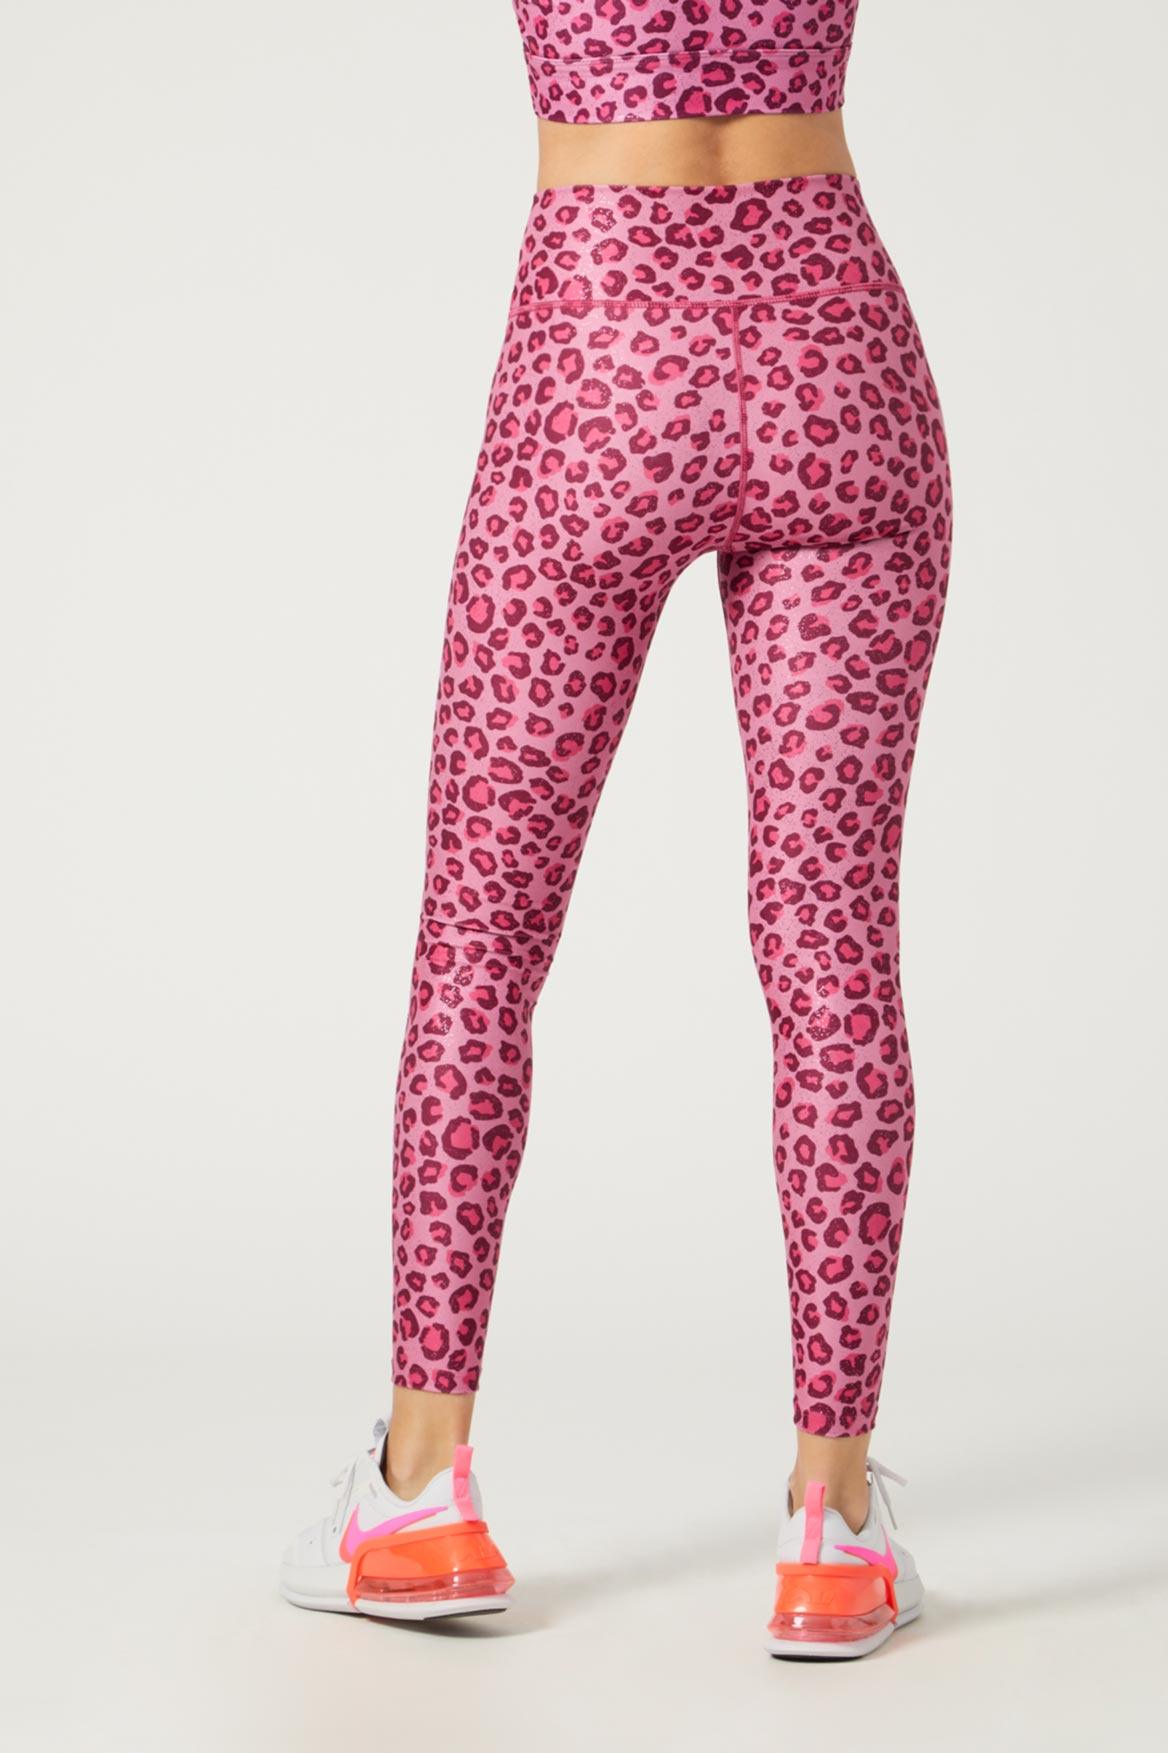 Pink Leopard Leggings for Women, Yoga Leggings, High Waisted Leggings, Cute  Printed Leggings, Kawaii Clothing, Harajuku Clothing, Rave Wear -   Canada